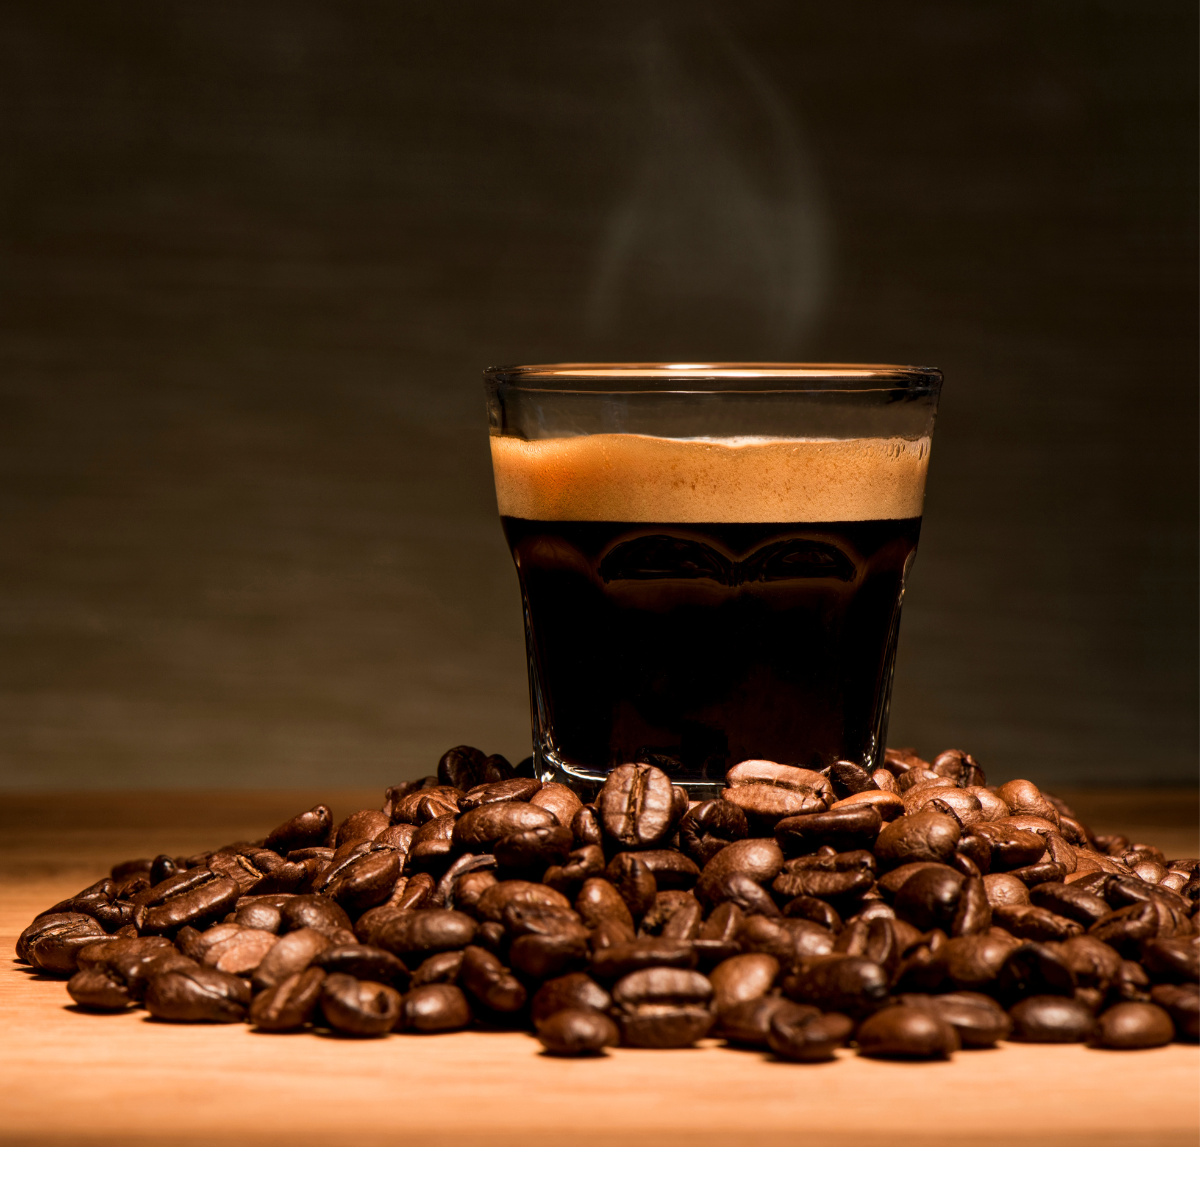 Espresso coffee beans